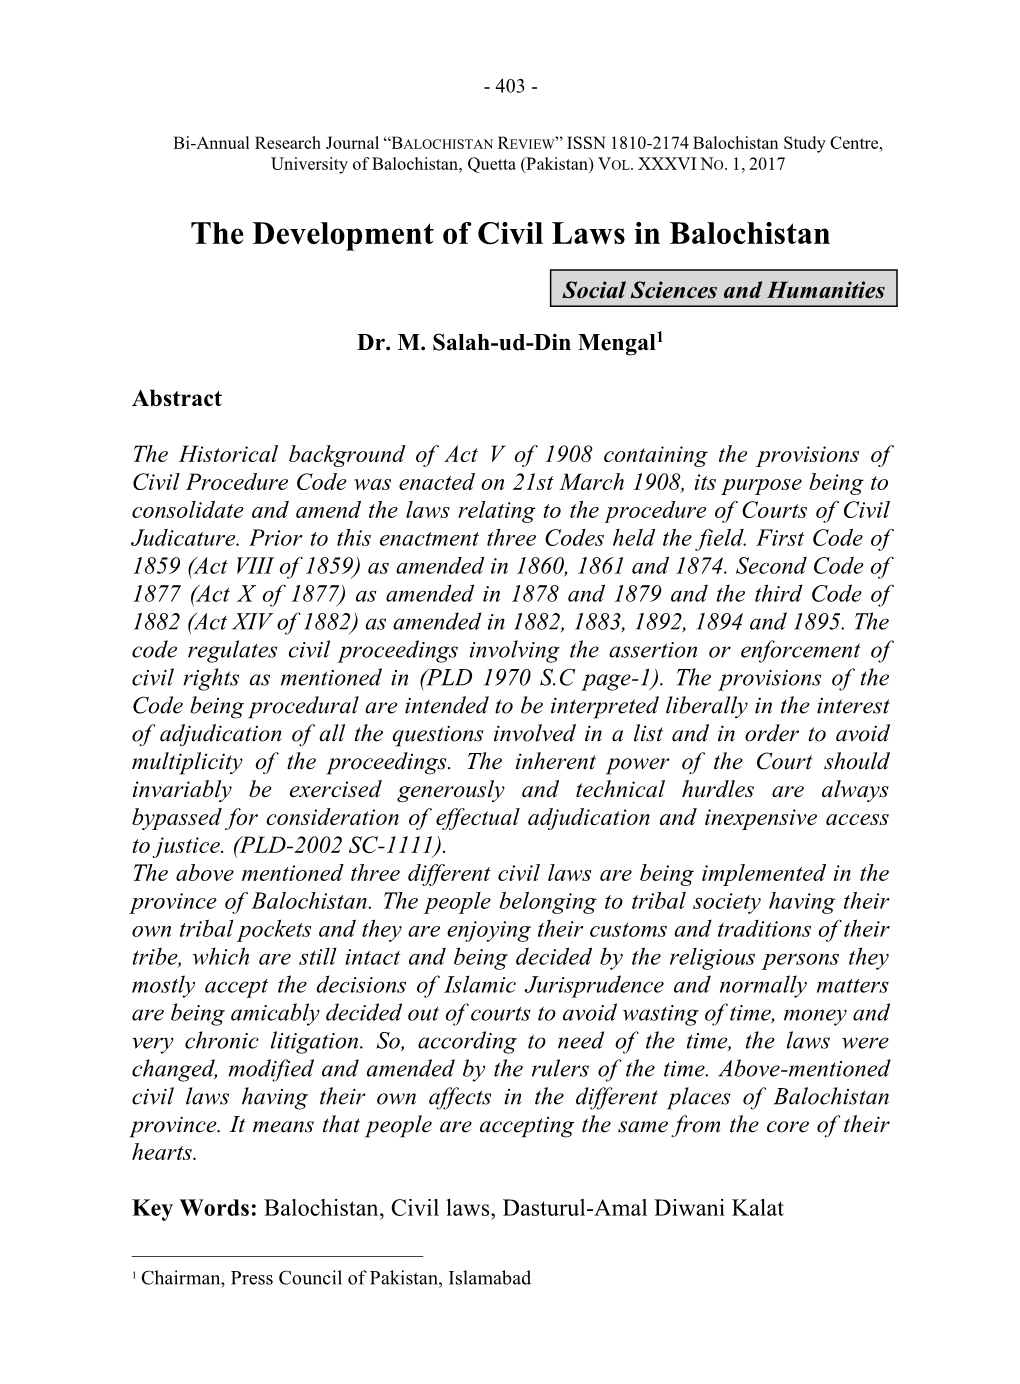 The Development of Civil Laws in Balochistan